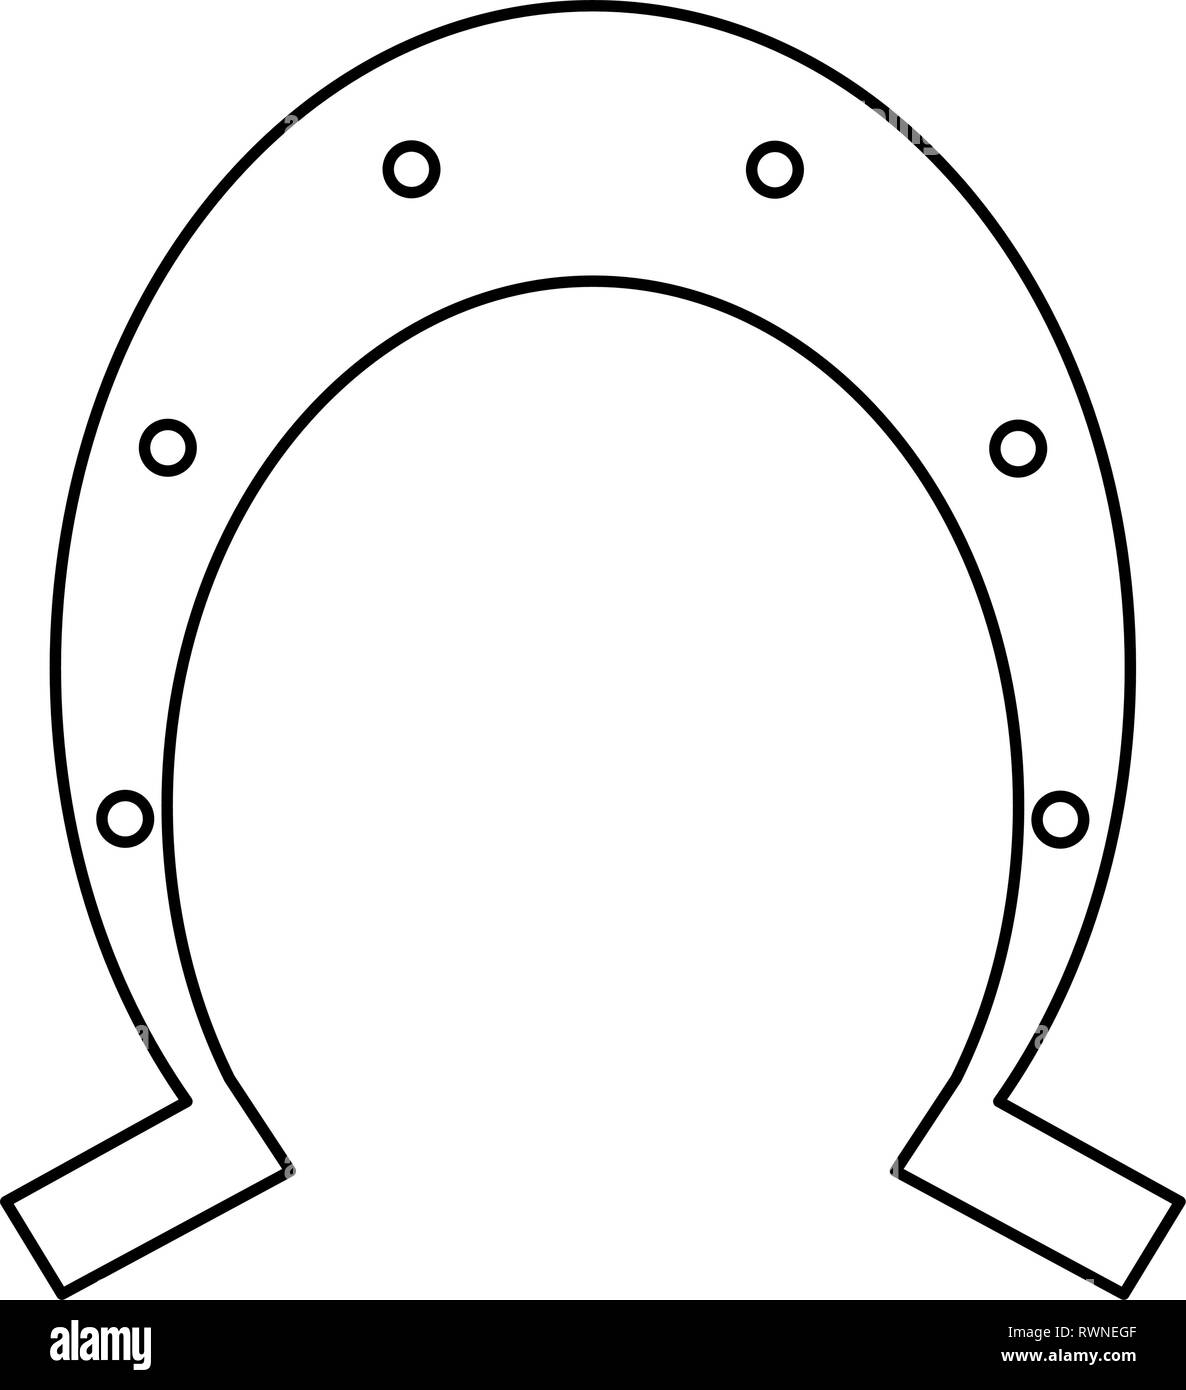 St patricks horseshoe symbol black and white Stock Vector